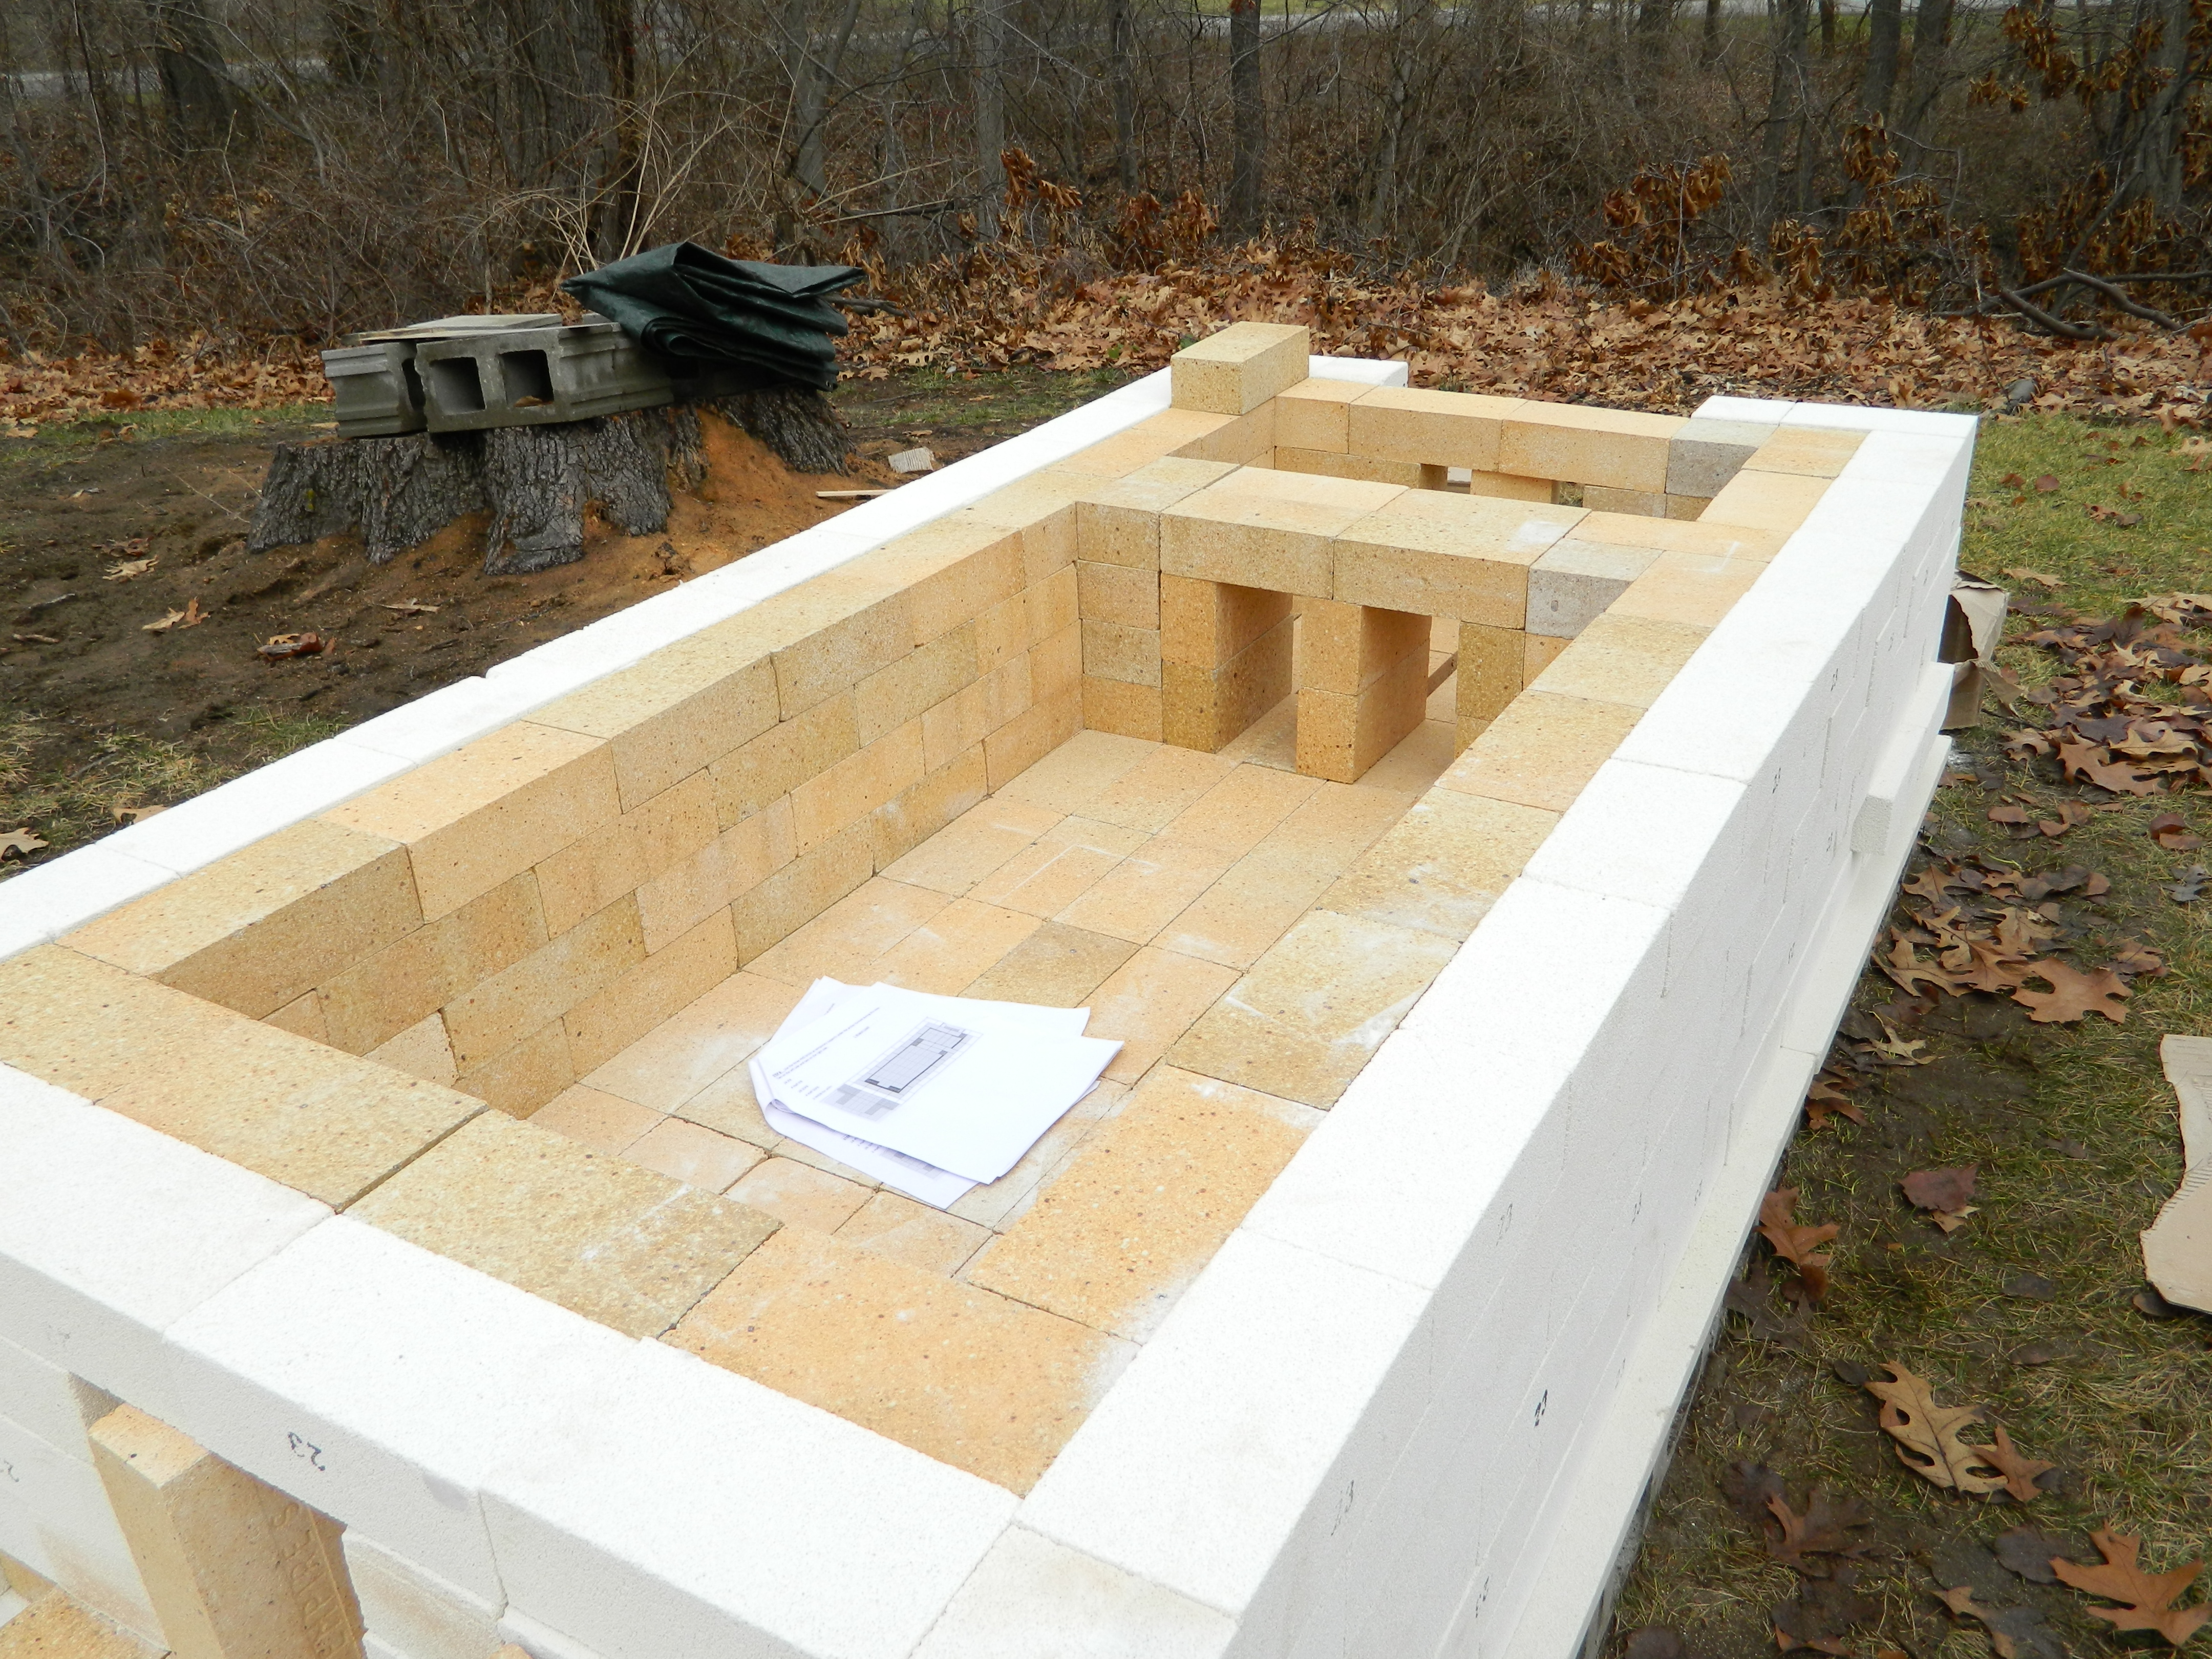 Wood Fired Ceramic Kiln – Kiln Construction | Dr. Stienecker's Site